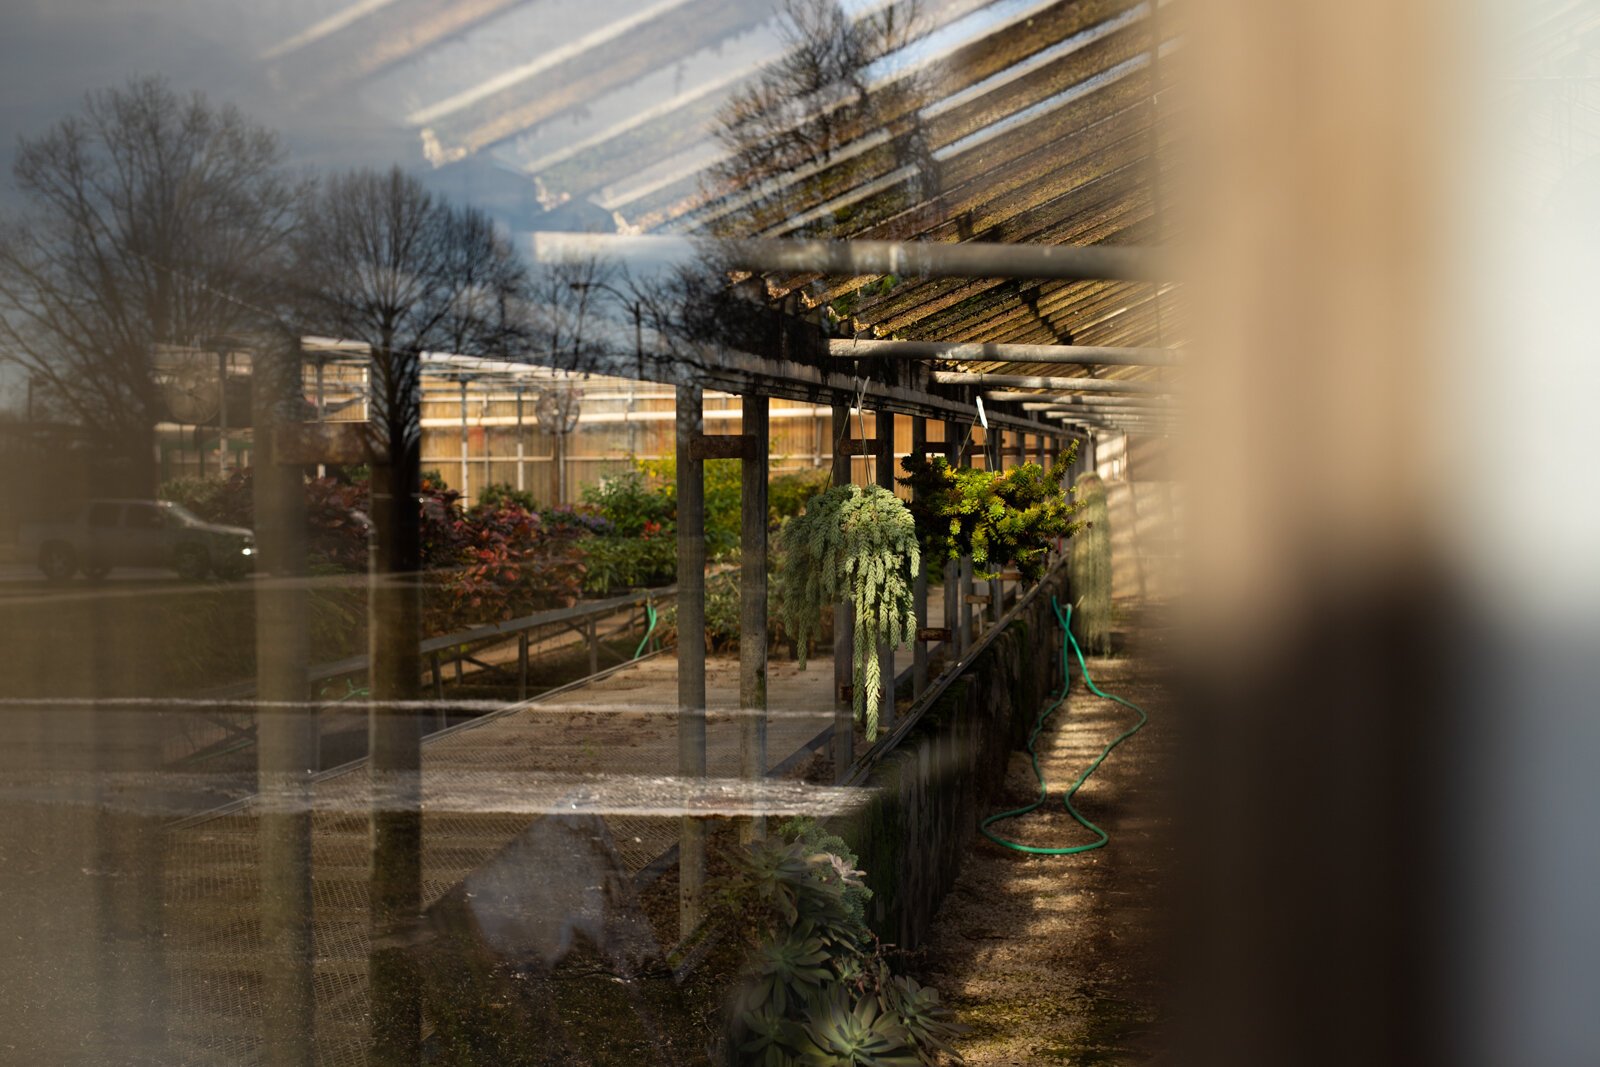 A peek inside the Landscape & Horticulture Lawton Greenhouse.